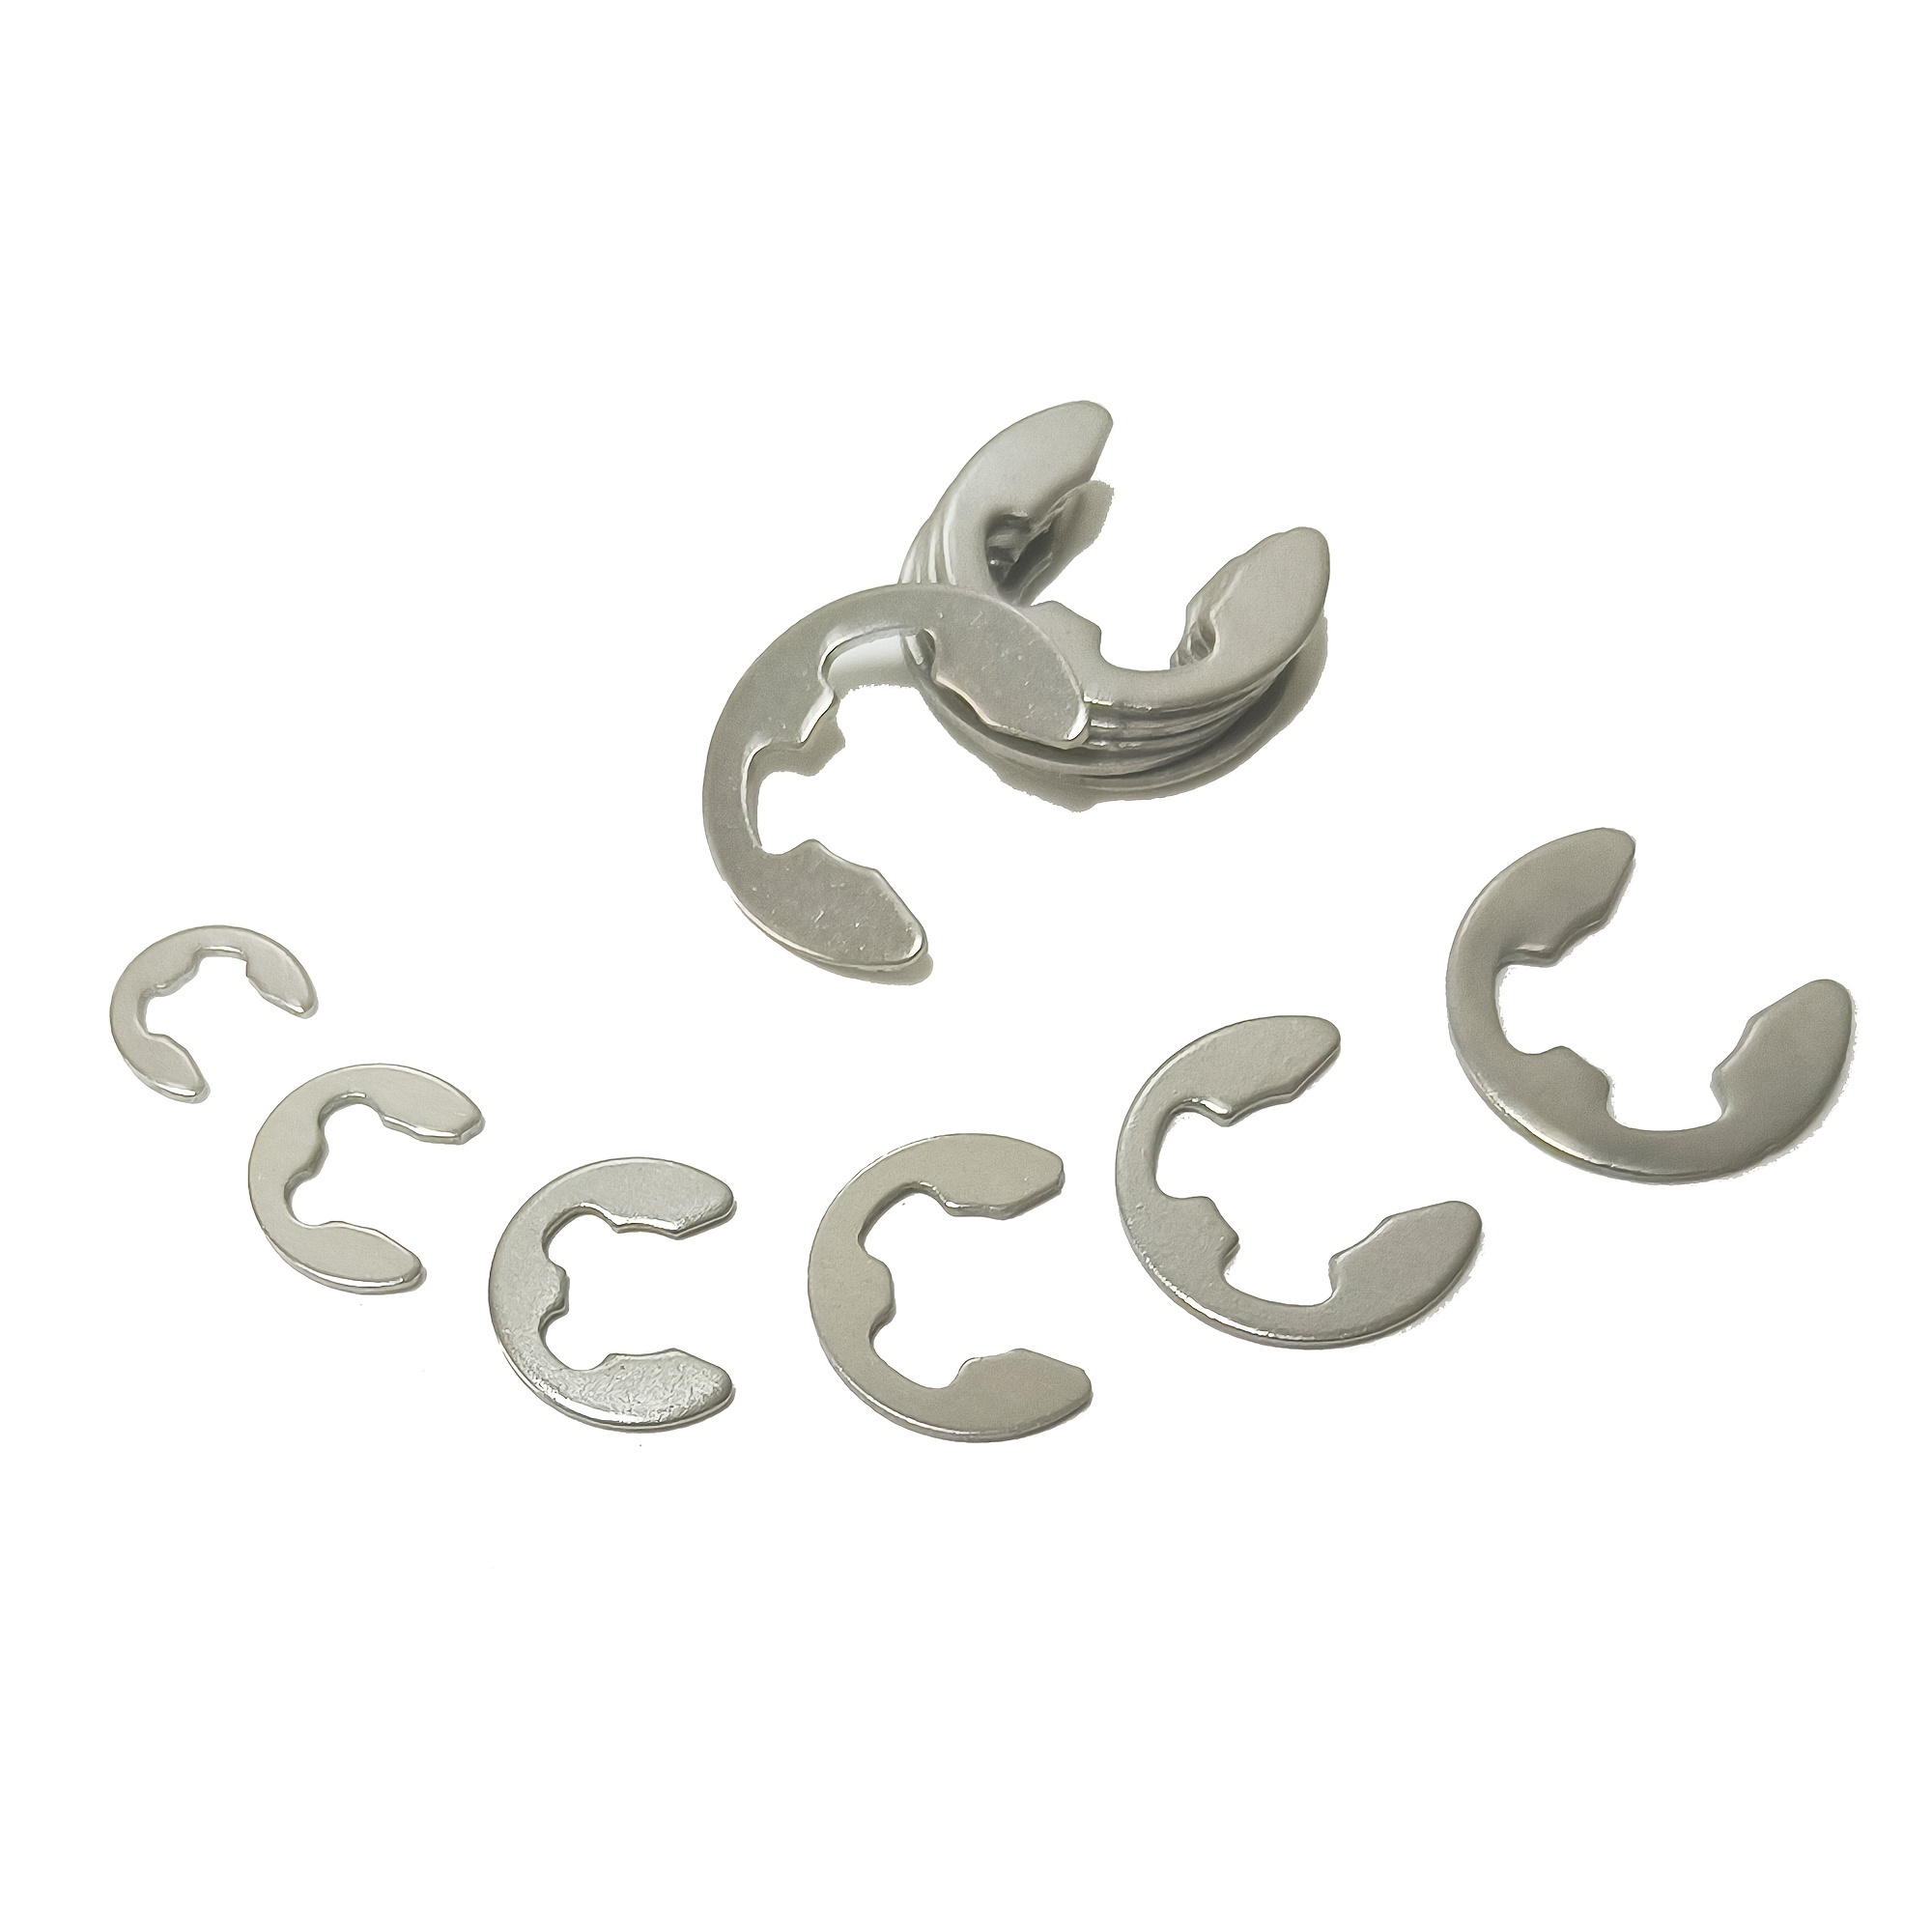  304 Stainless Steel E Clip Assortment Kit E-Clip External  Retaining Ring Assortment Set (M1.5-M10,120 PCS) : Industrial & Scientific